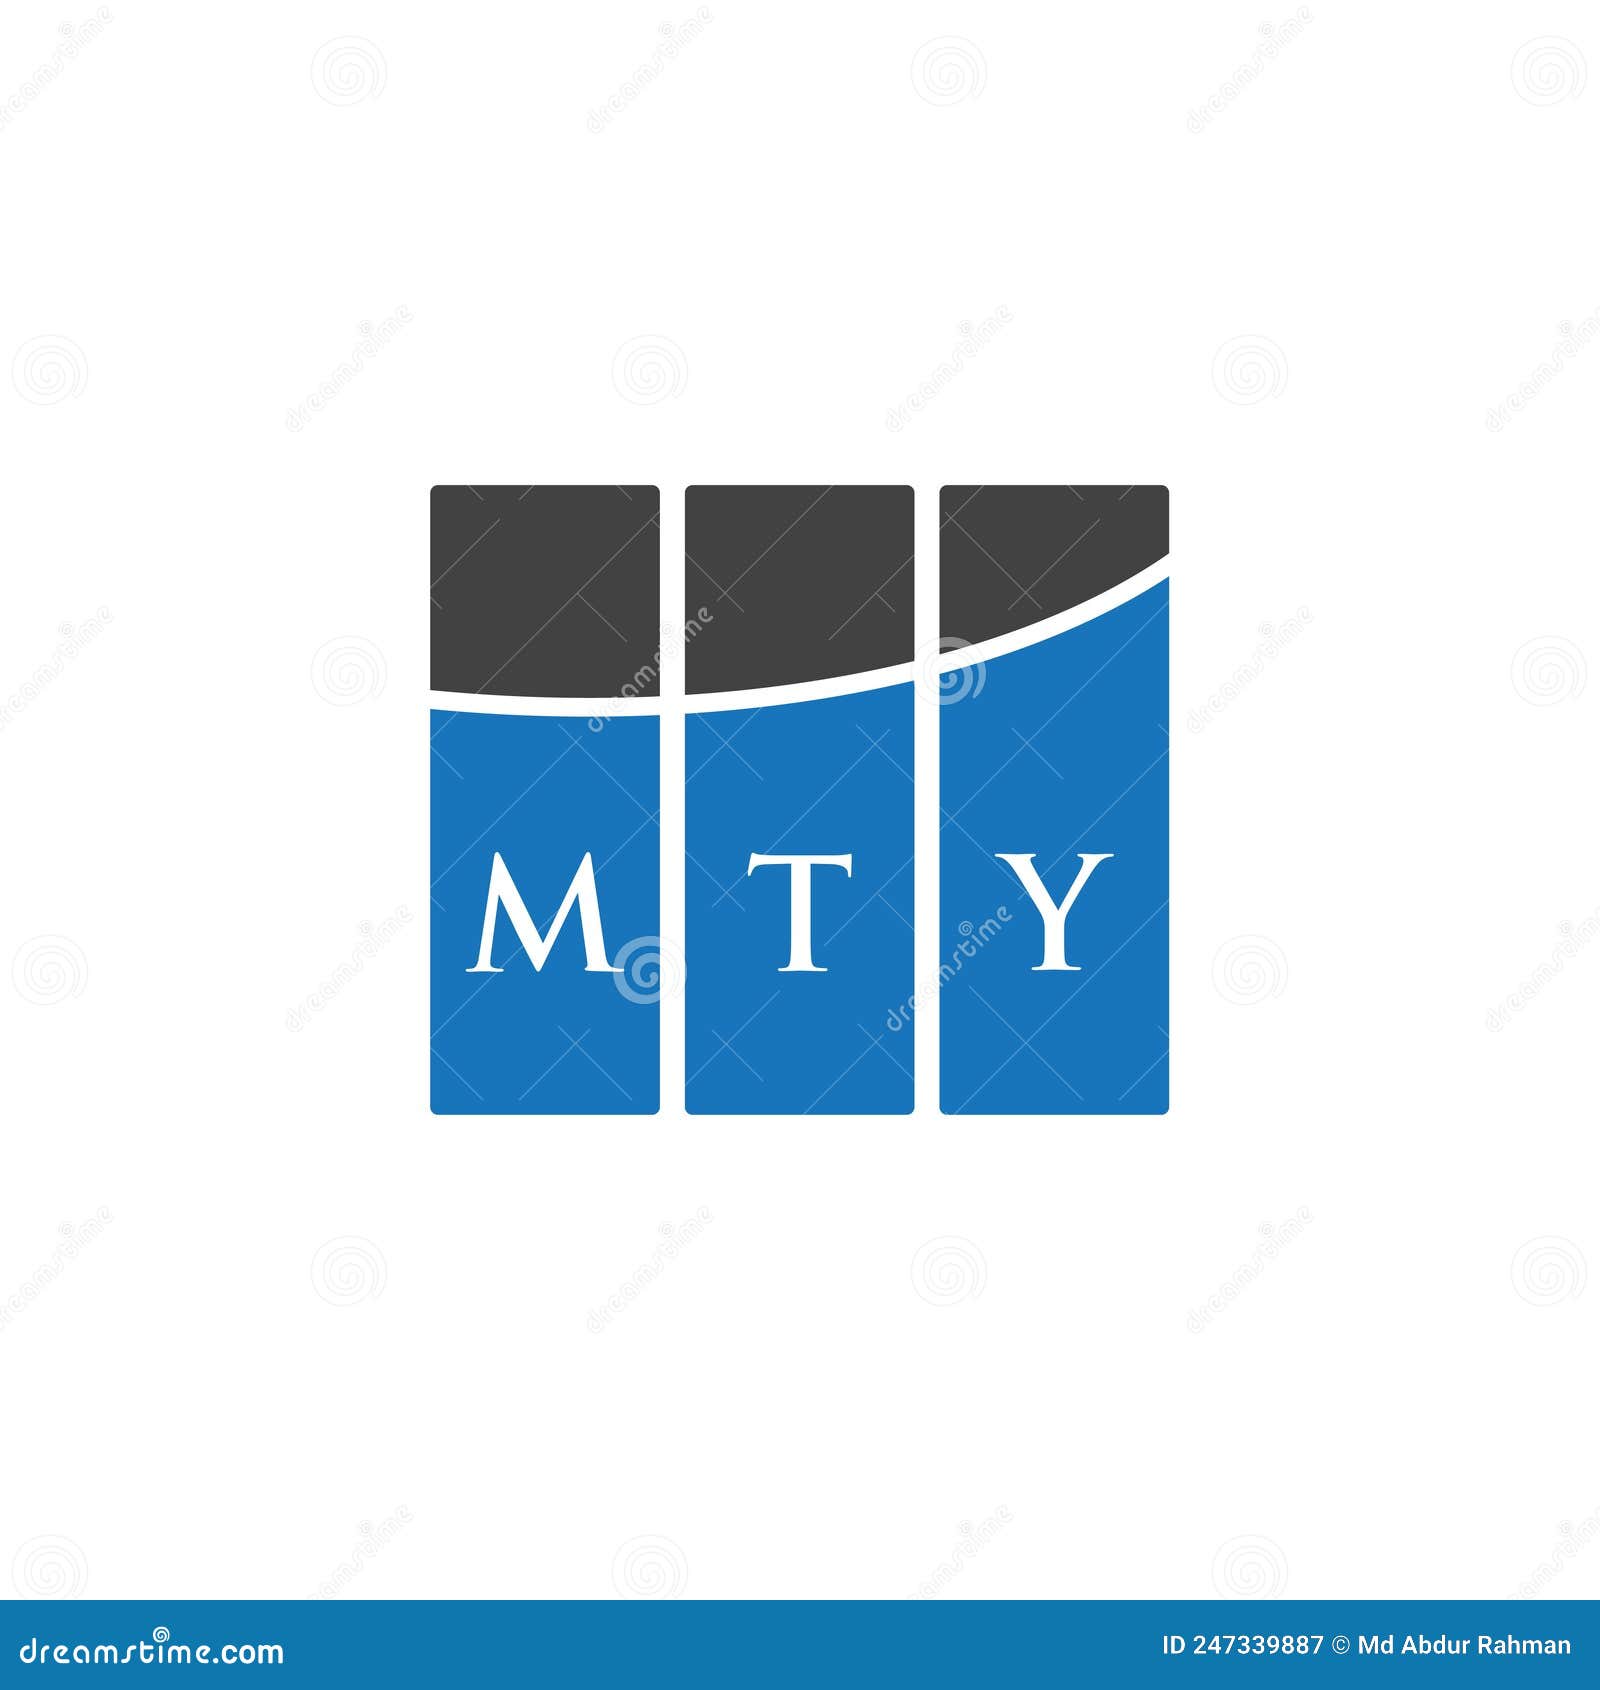 mty letter logo  on white background. mty creative initials letter logo concept. mty letter .mty letter logo  on